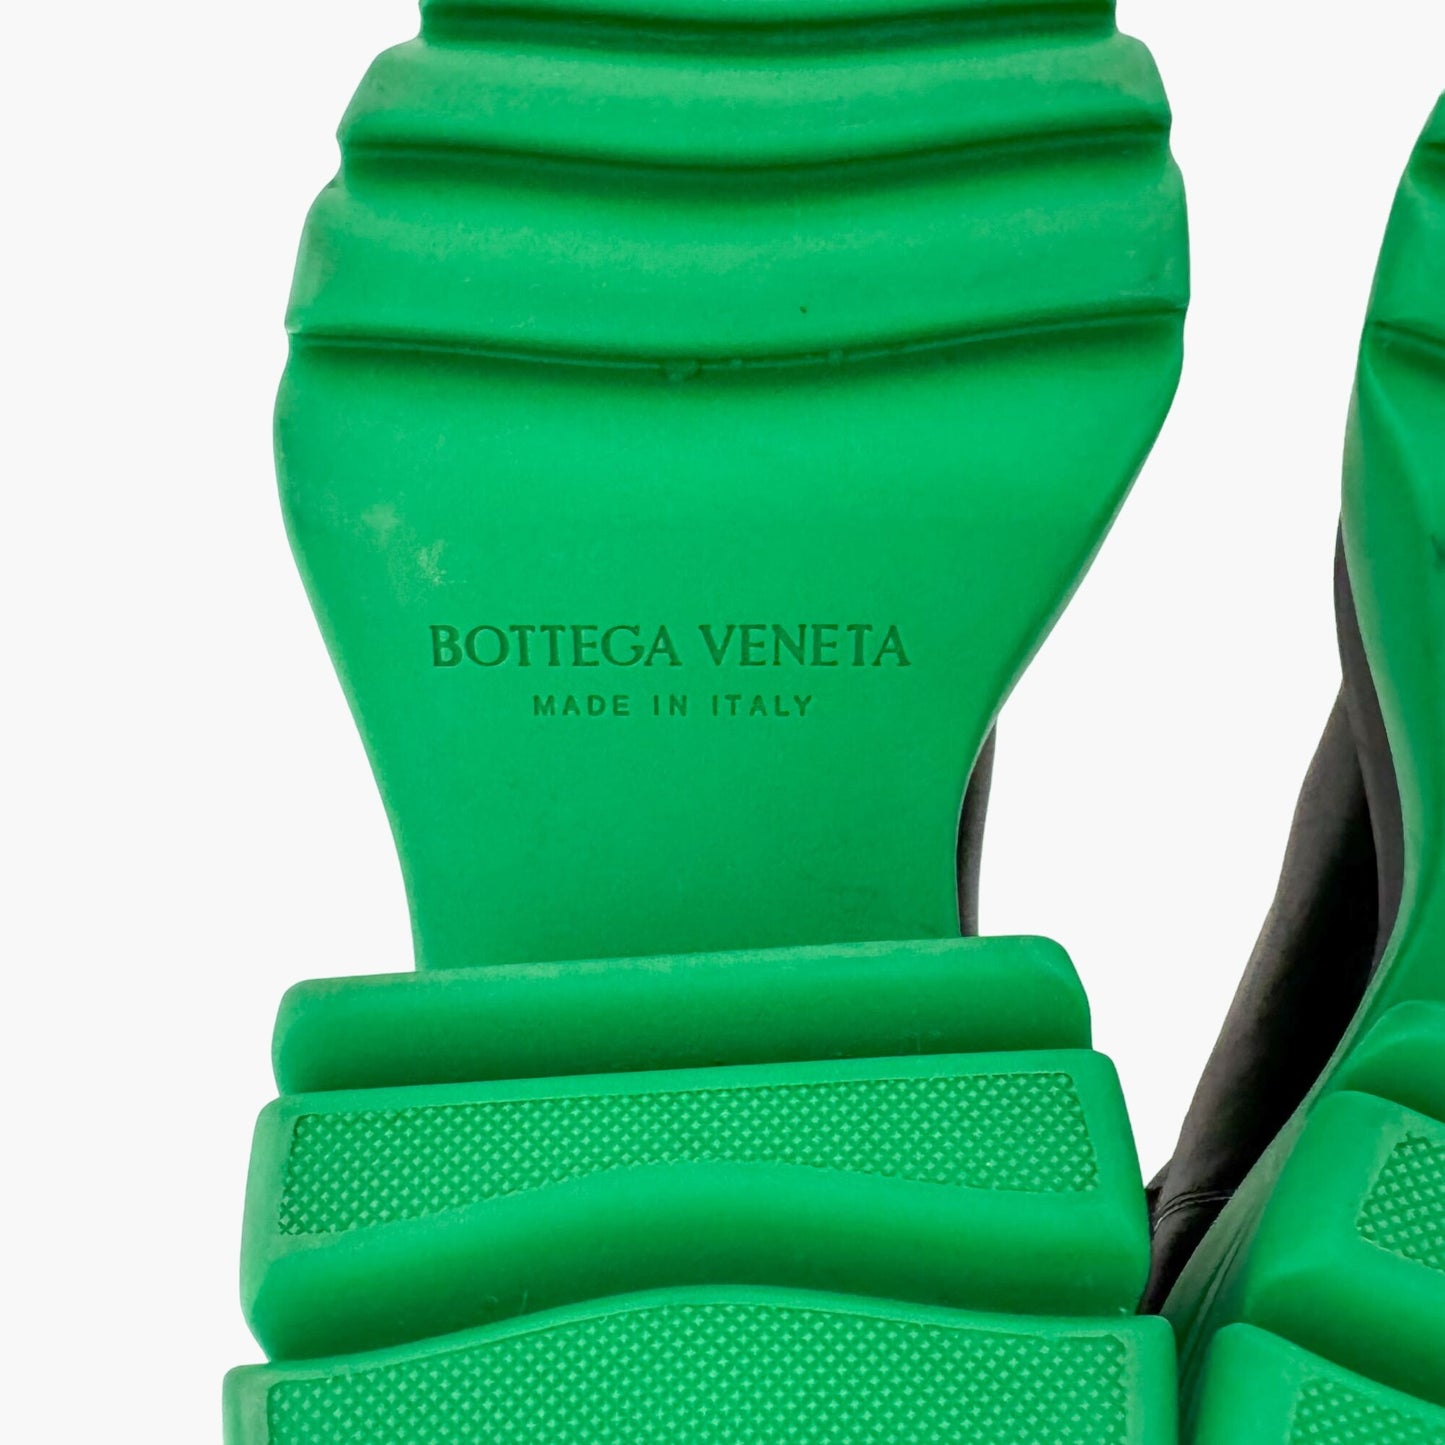 Bottega Veneta Flash Knee High Boots in Black Leather Size 38